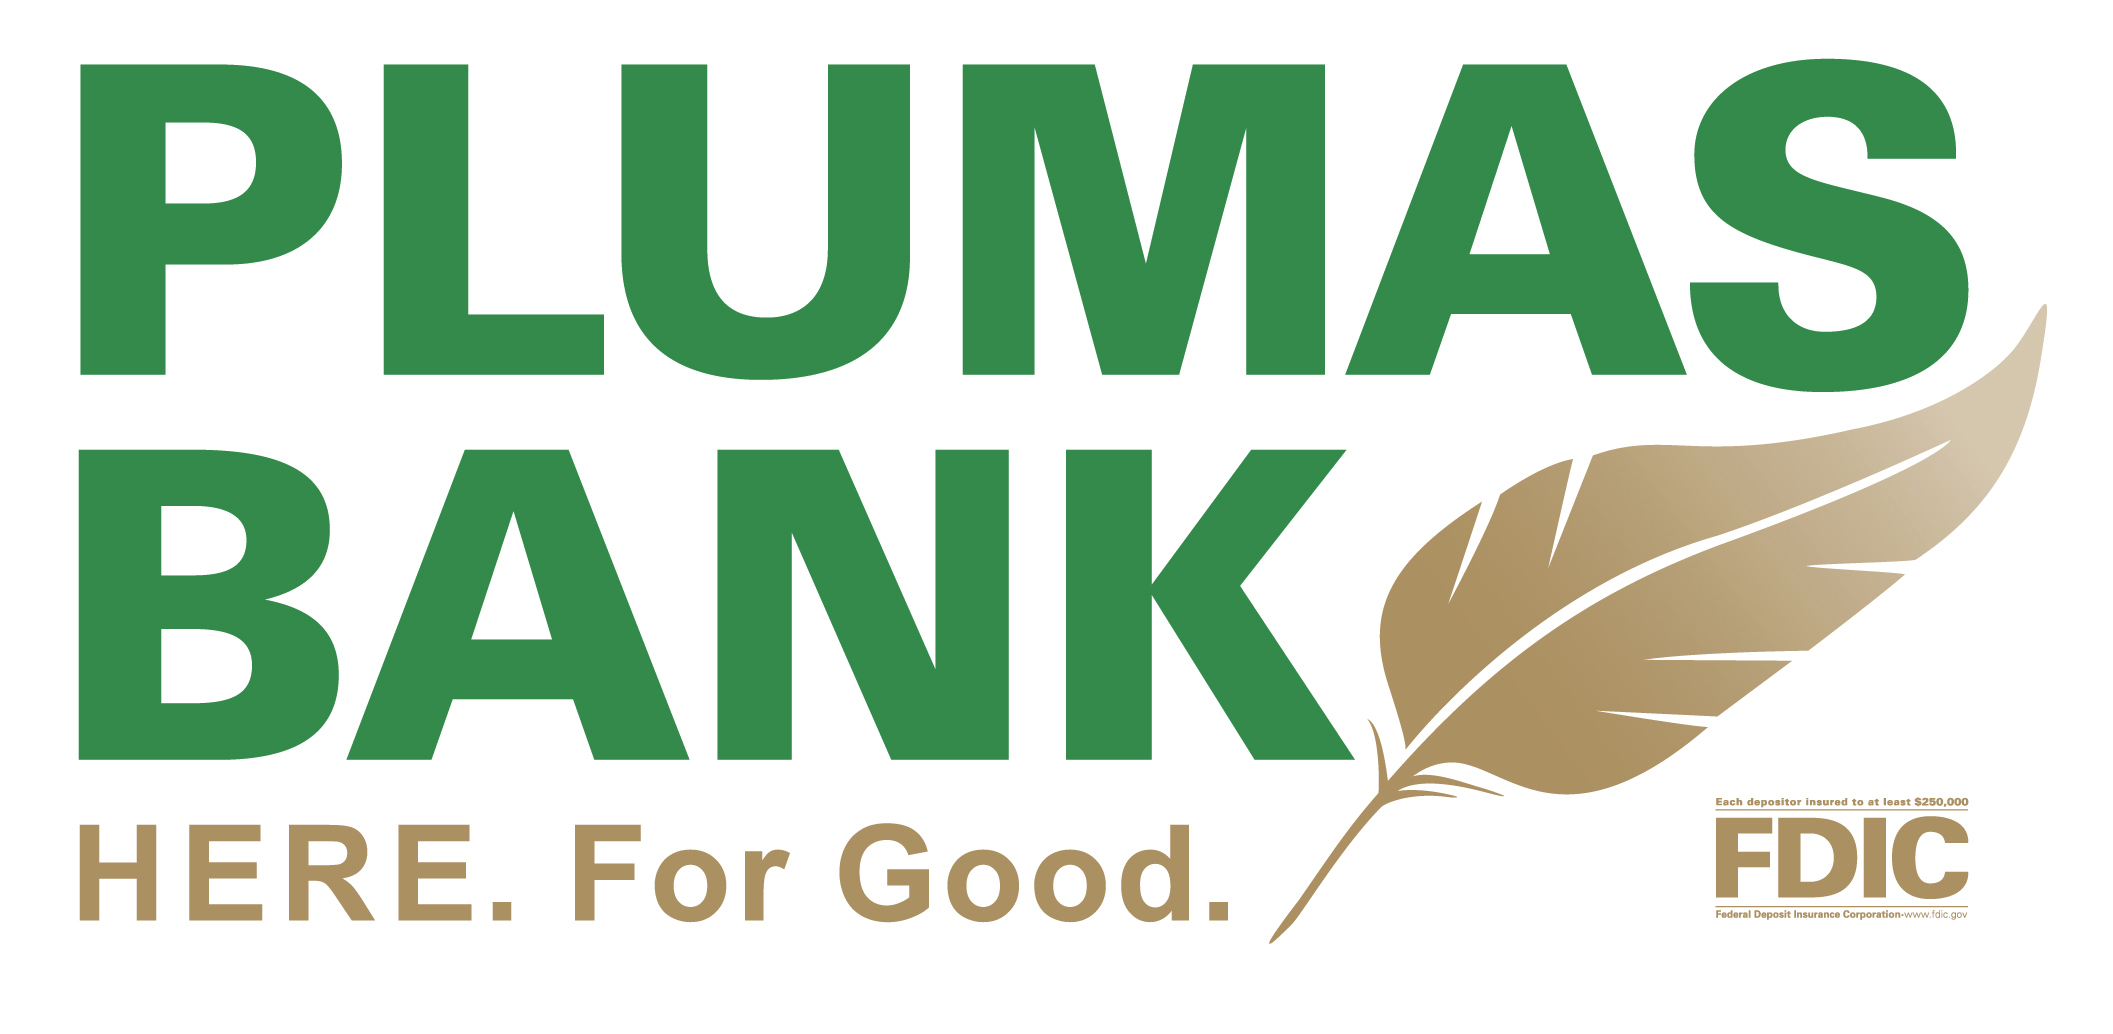 inline image showing the Plumas Bank logo